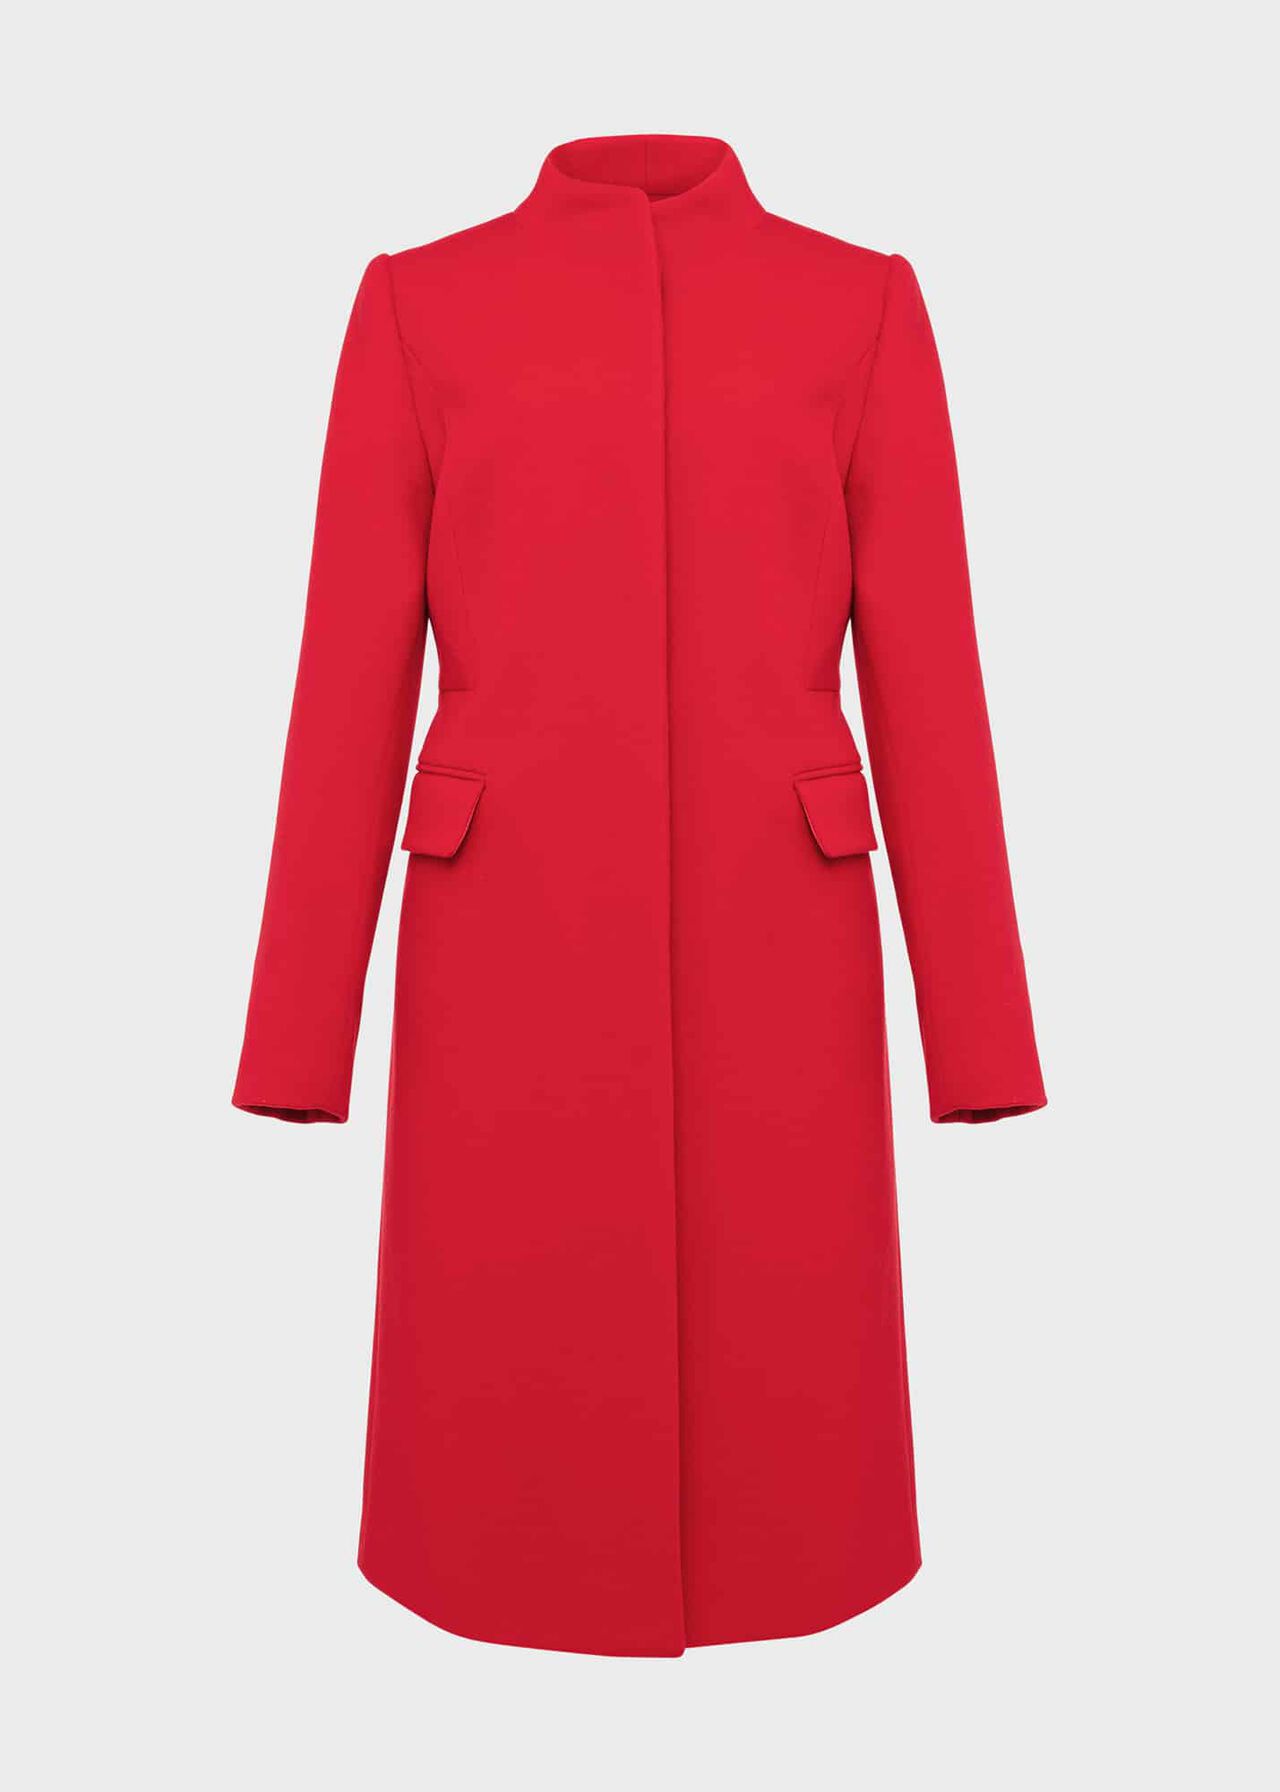 Petite Rhiannon Wool Blend Coat, Red, hi-res